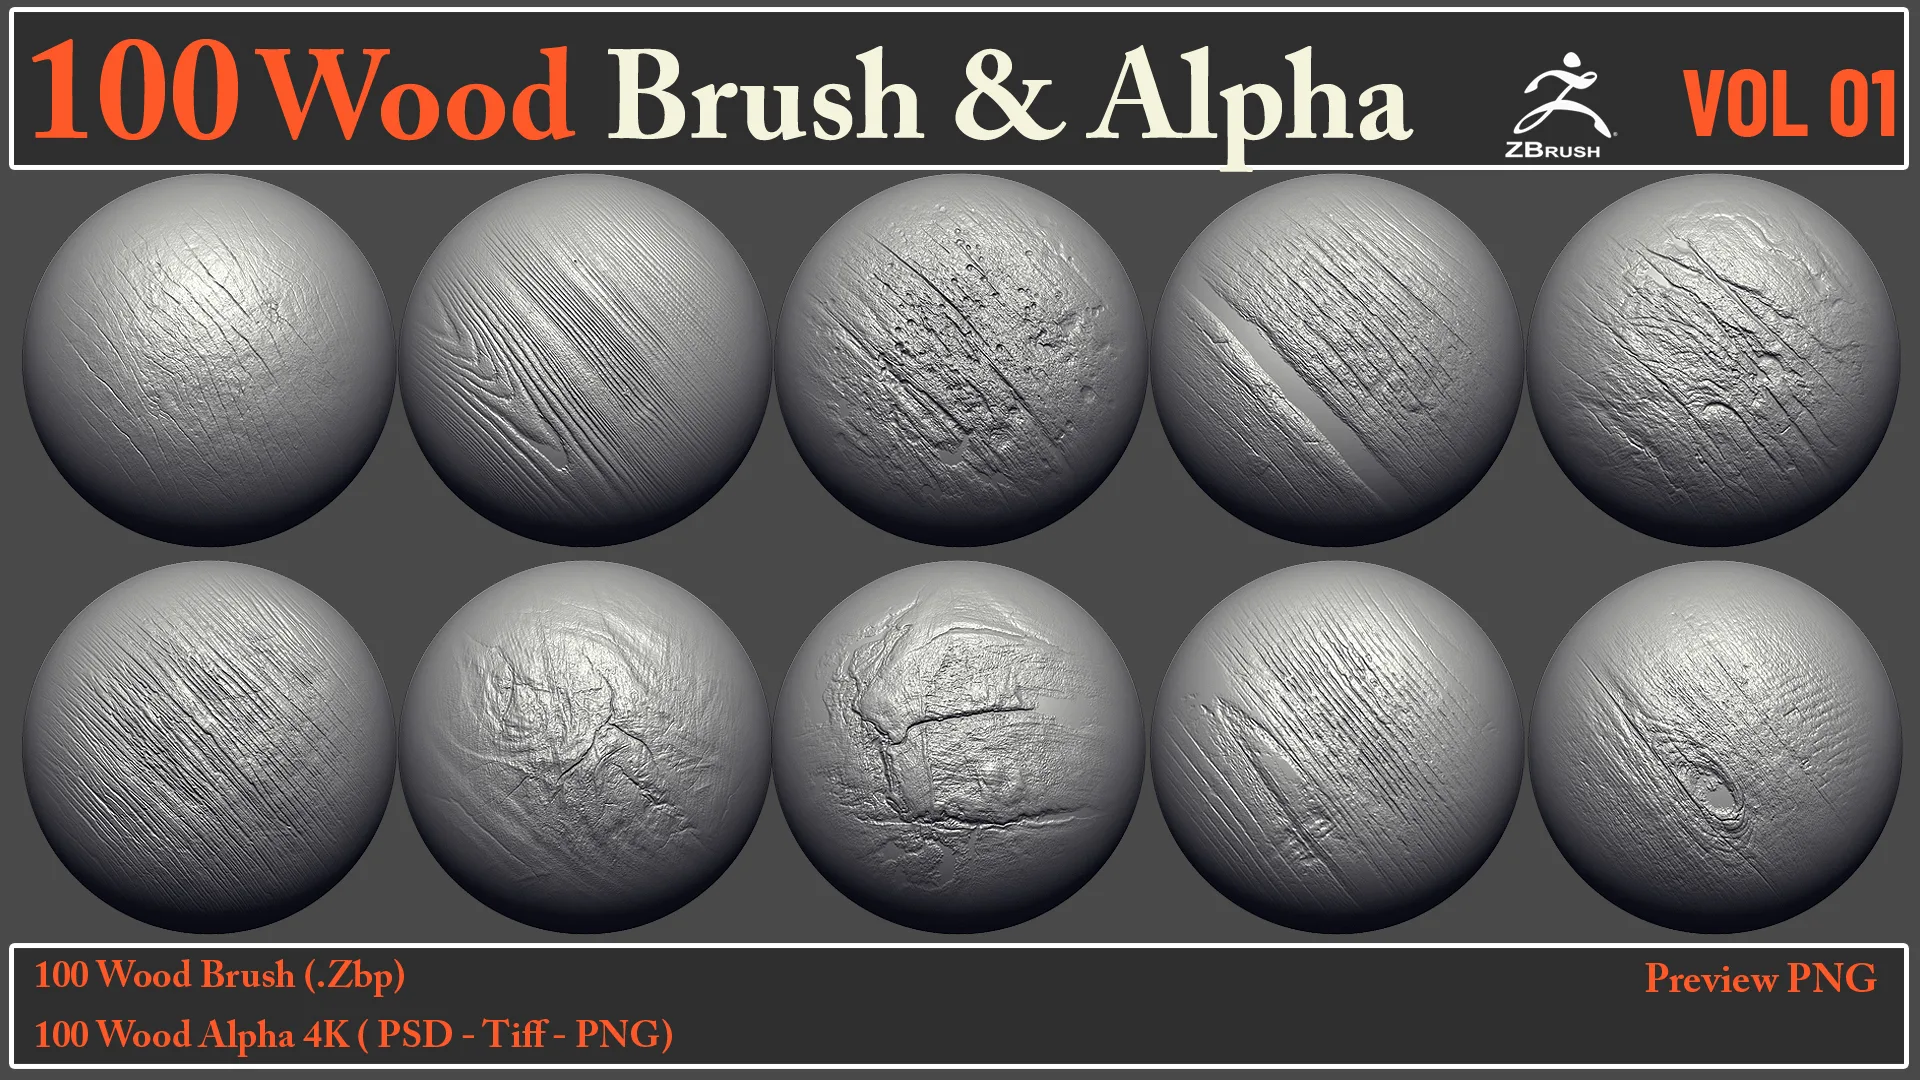 100 Wood Brush & Alpha VOL 01